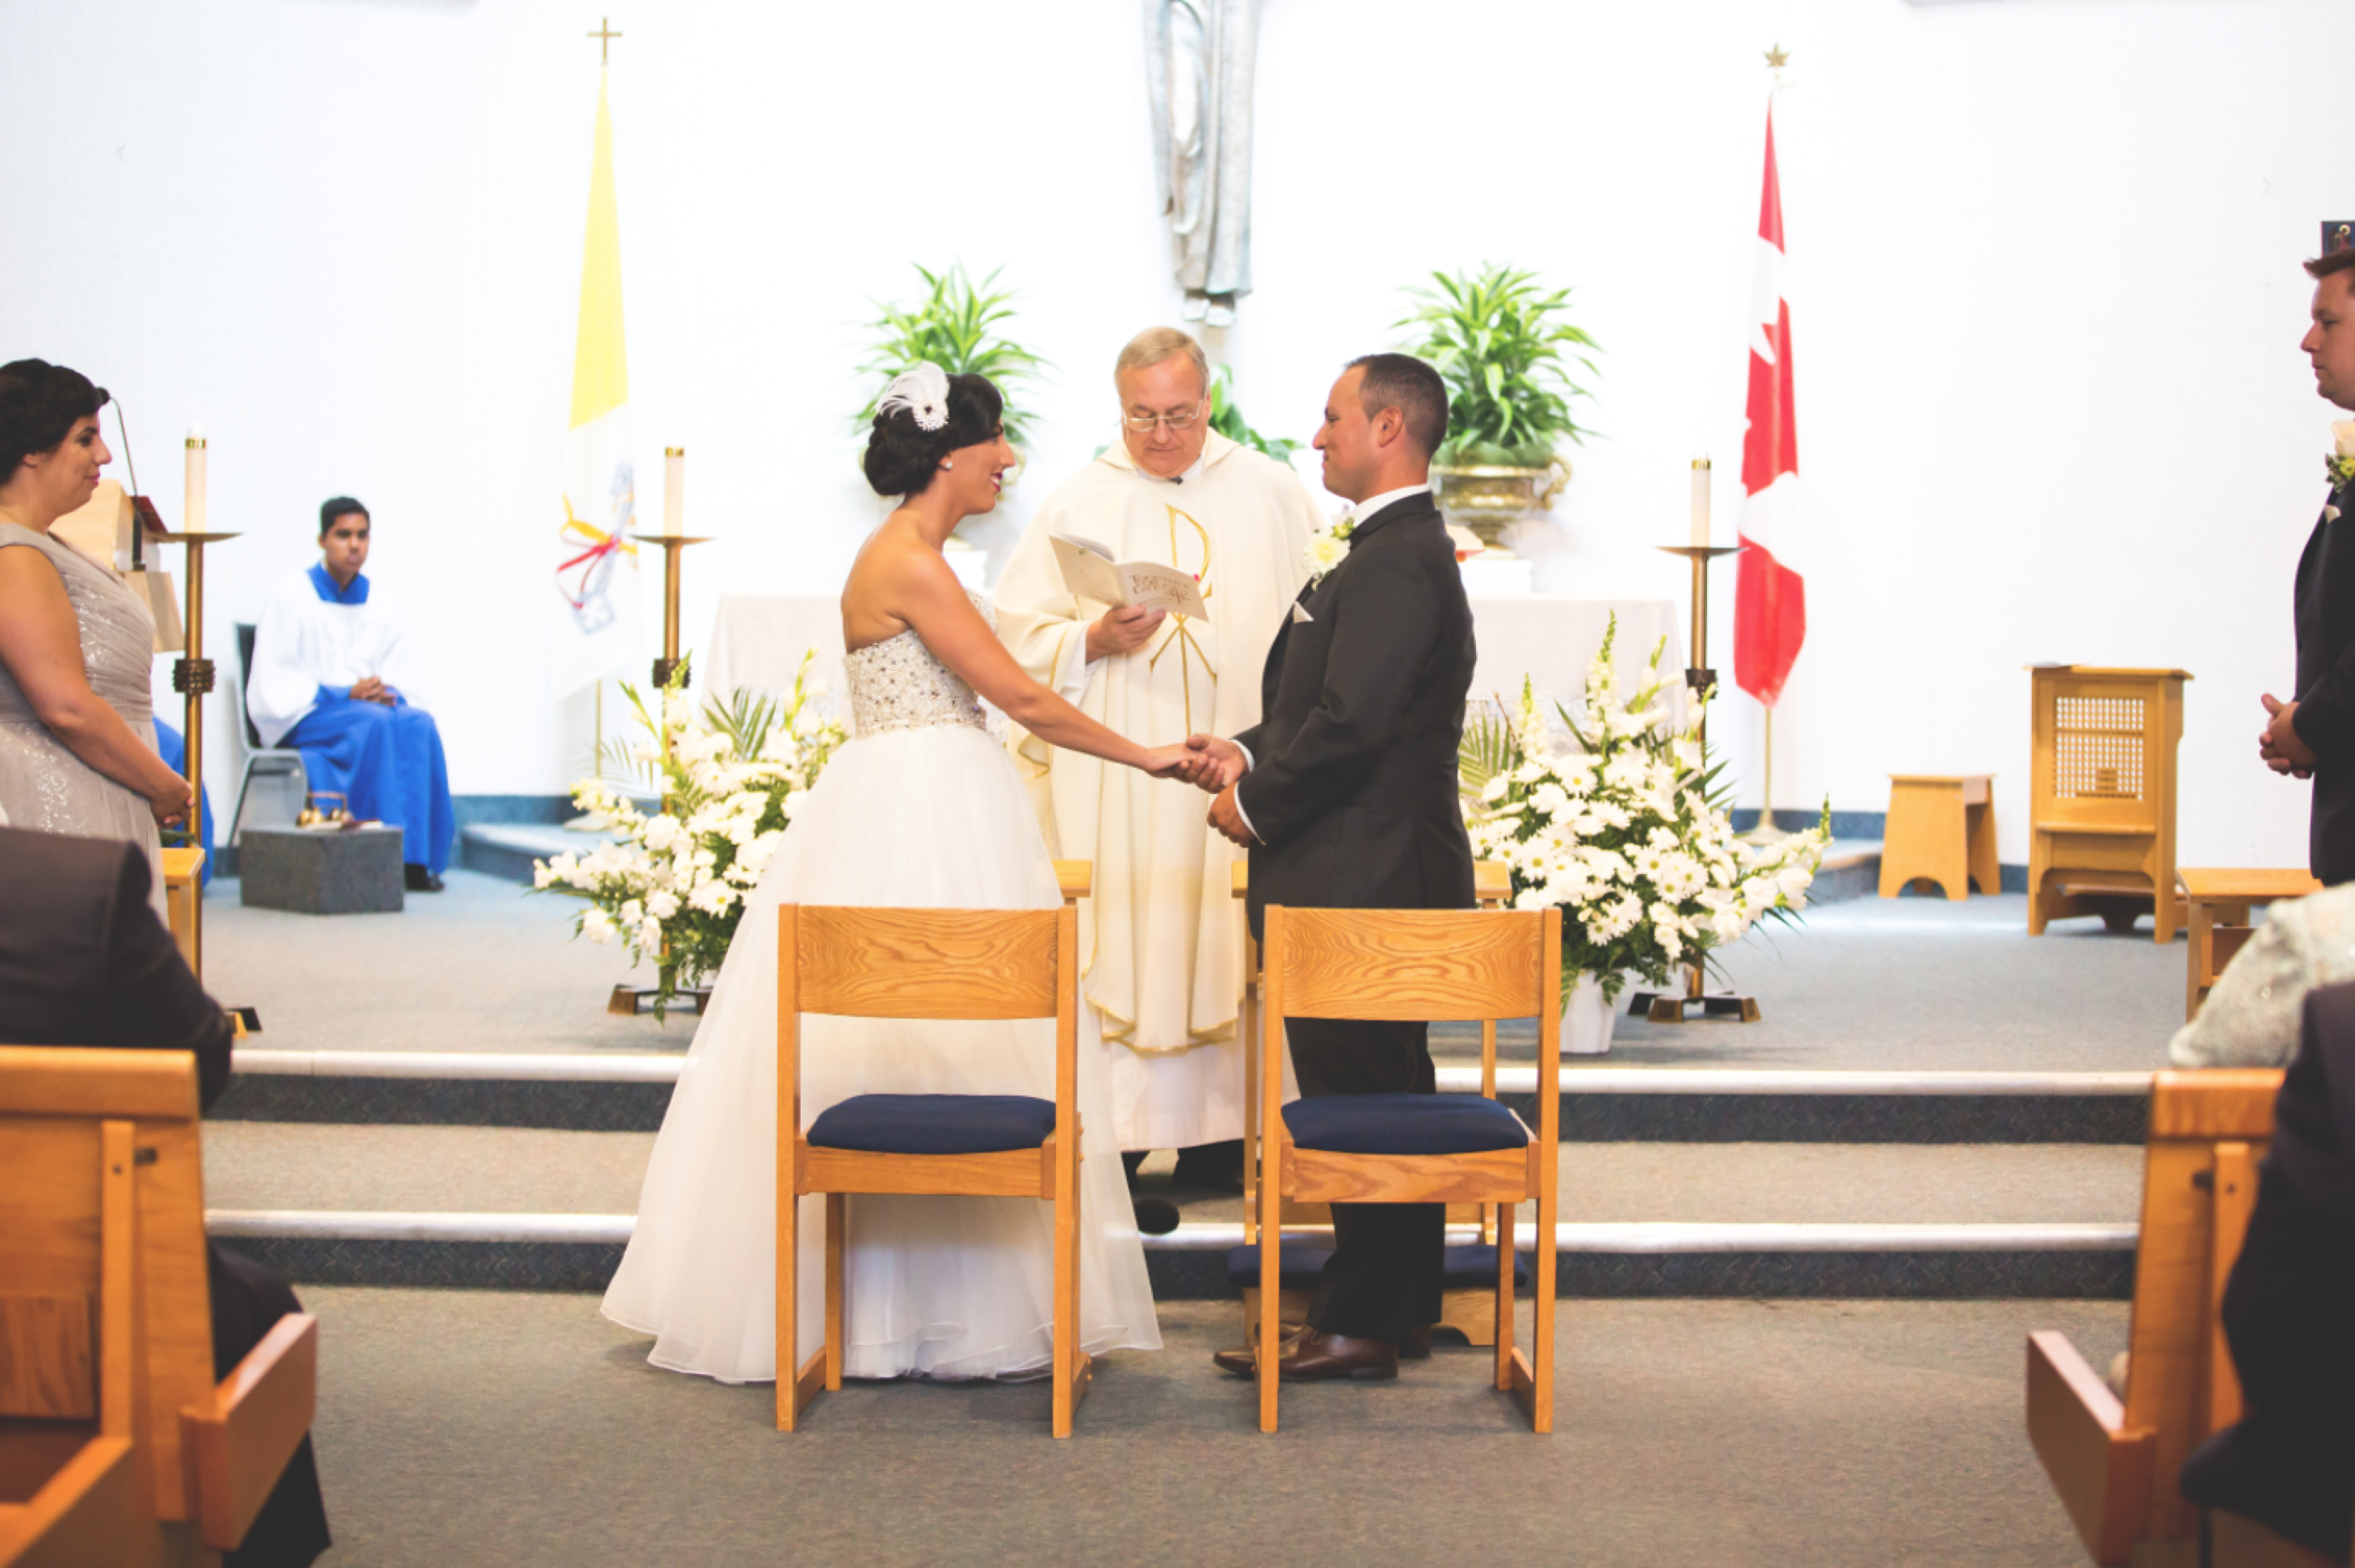 Wedding-Photography-Hamilton-Burlington-Oakville-Toronto-Niagara-Photographer-Moments-by-Lauren-Michaelangelos-Banquet-Center-Photos-HamOnt-Bride-Groom-Image-24.png